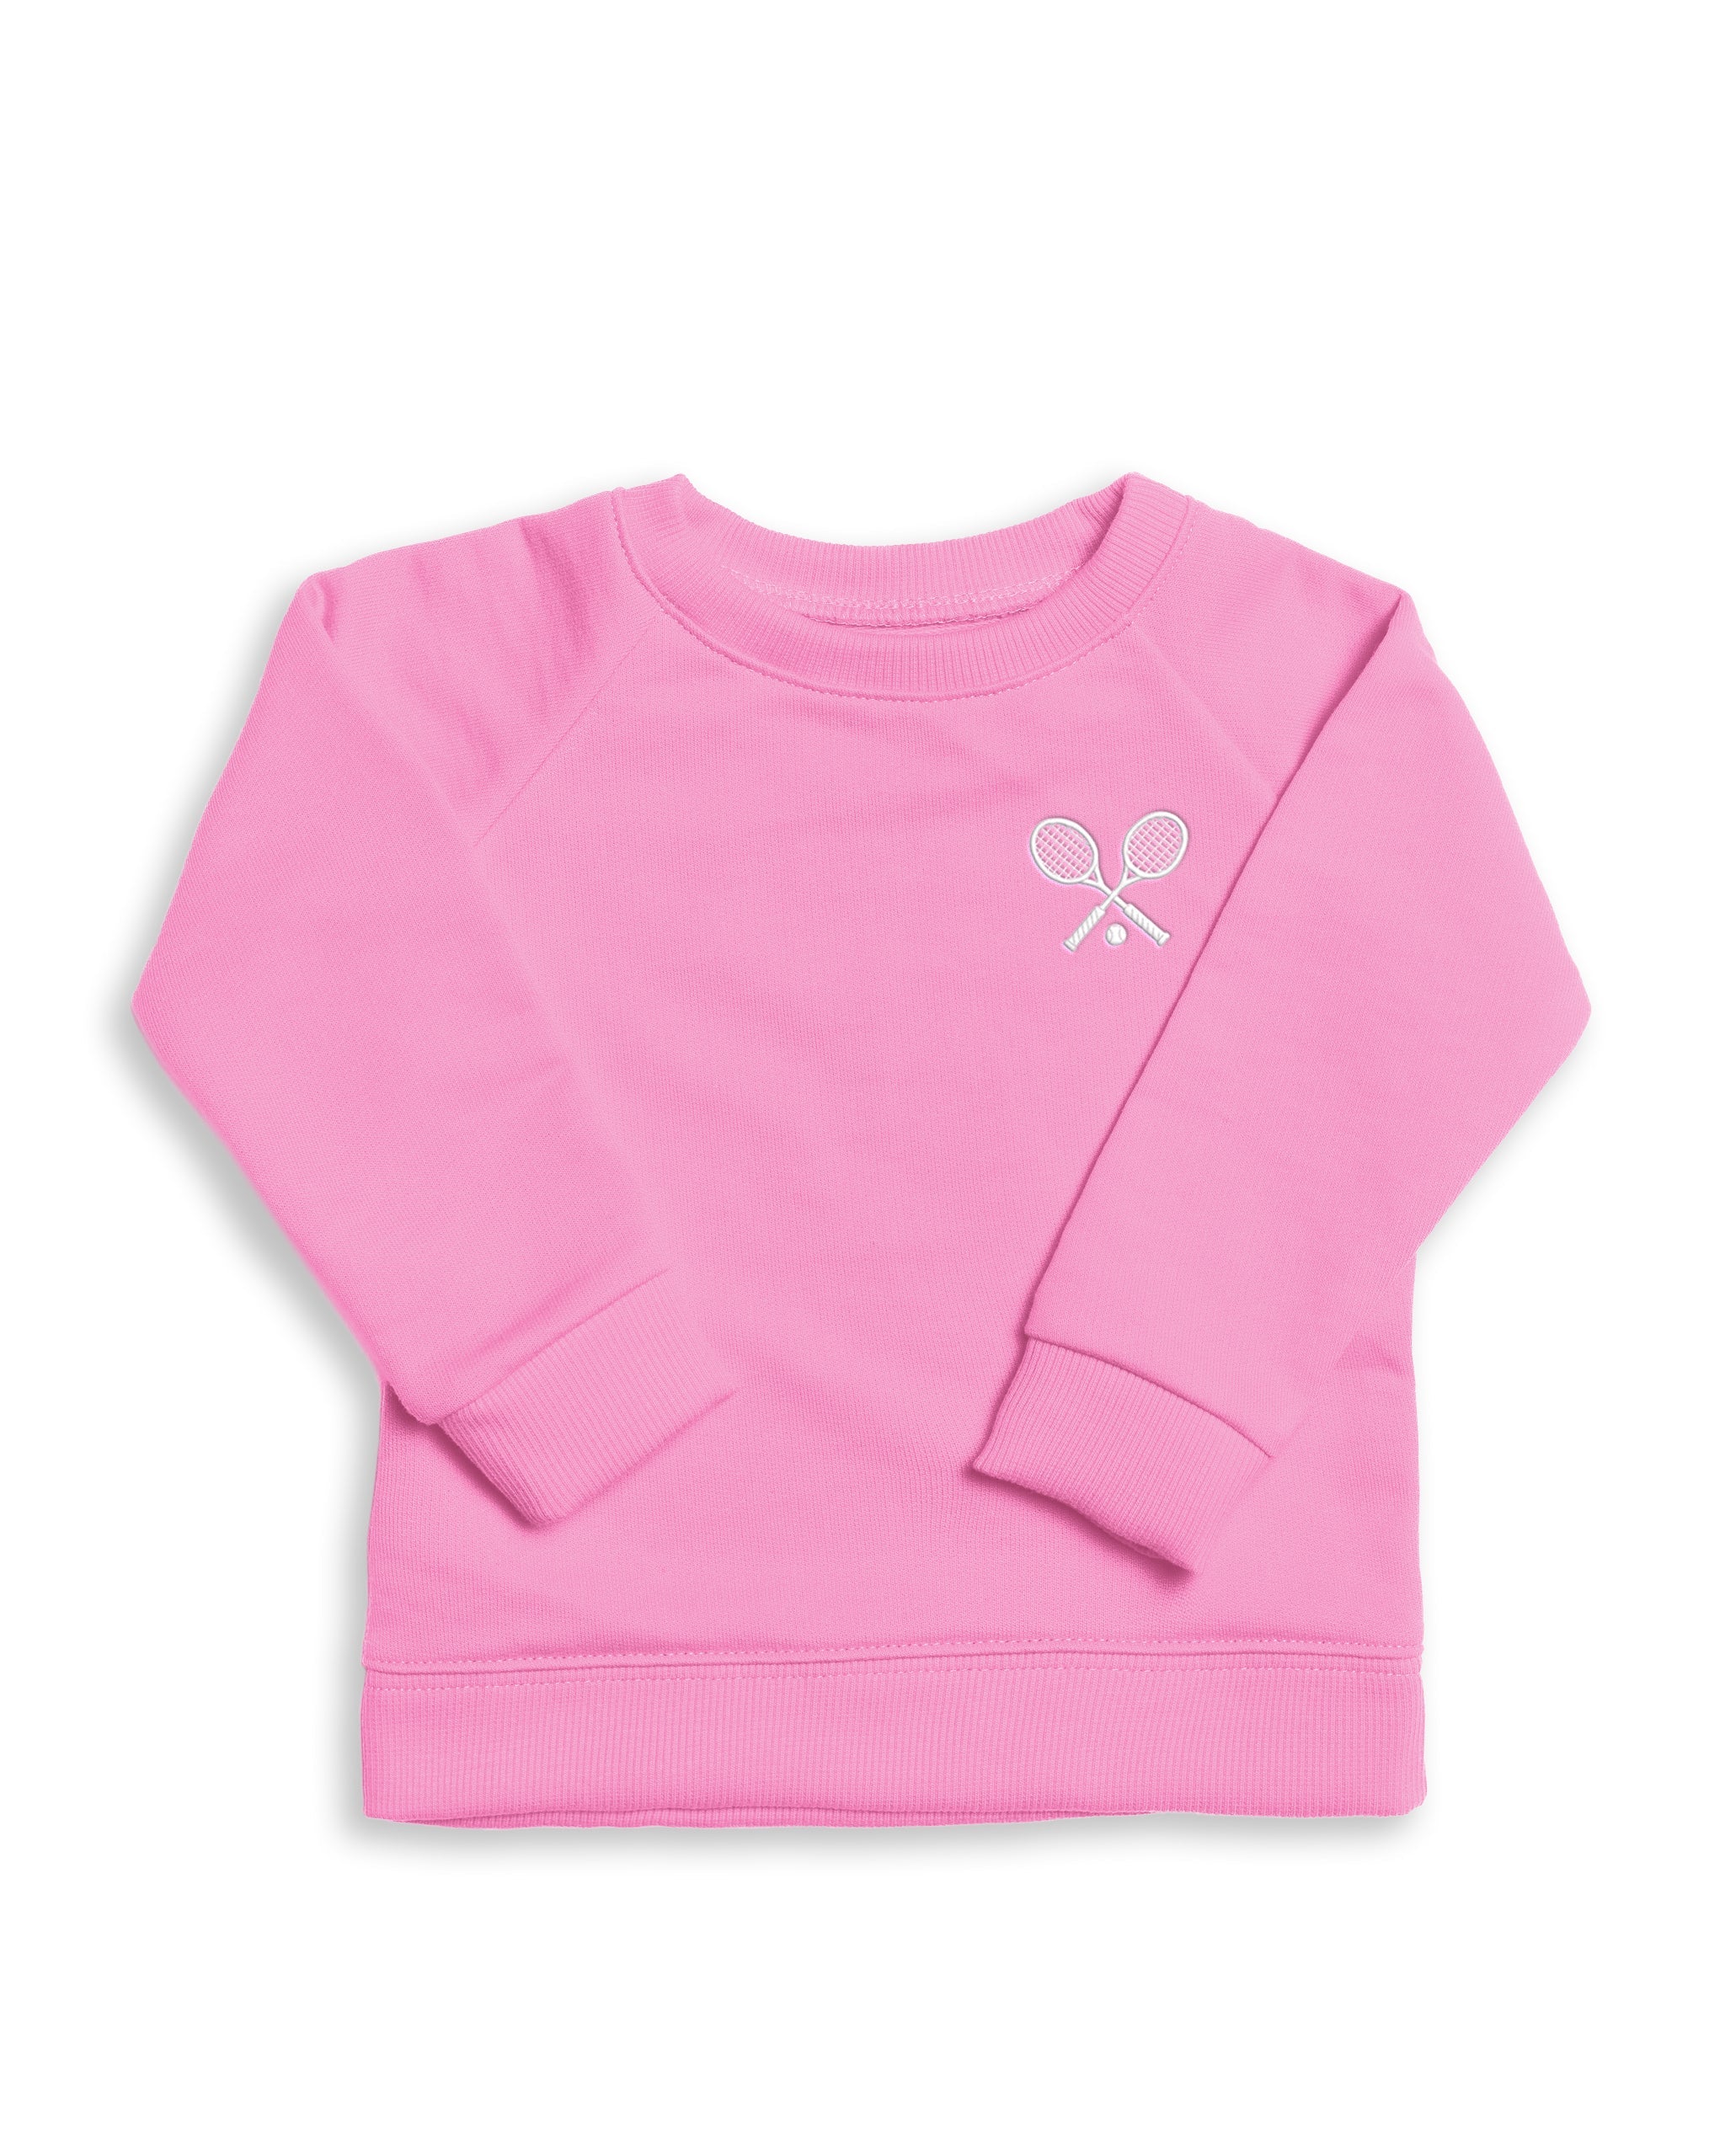 The Organic Embroidered Pullover Sweatshirt [Malibu Pink Tennis]